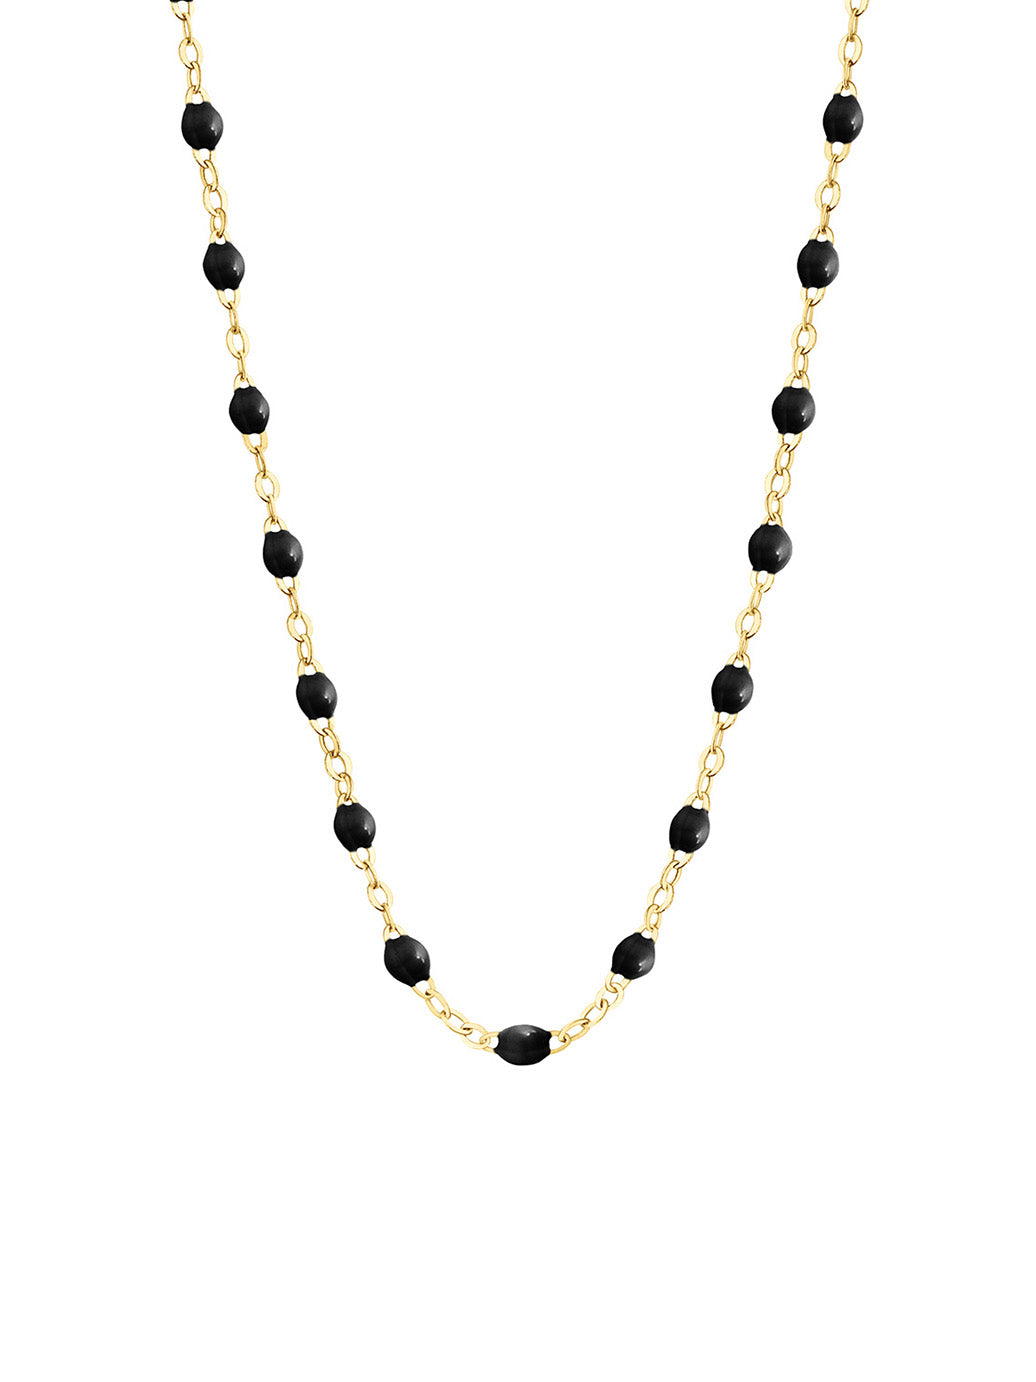 Photos - Pendant / Choker Necklace Classic Gigi Black Resin Yellow Gold Necklace, 18